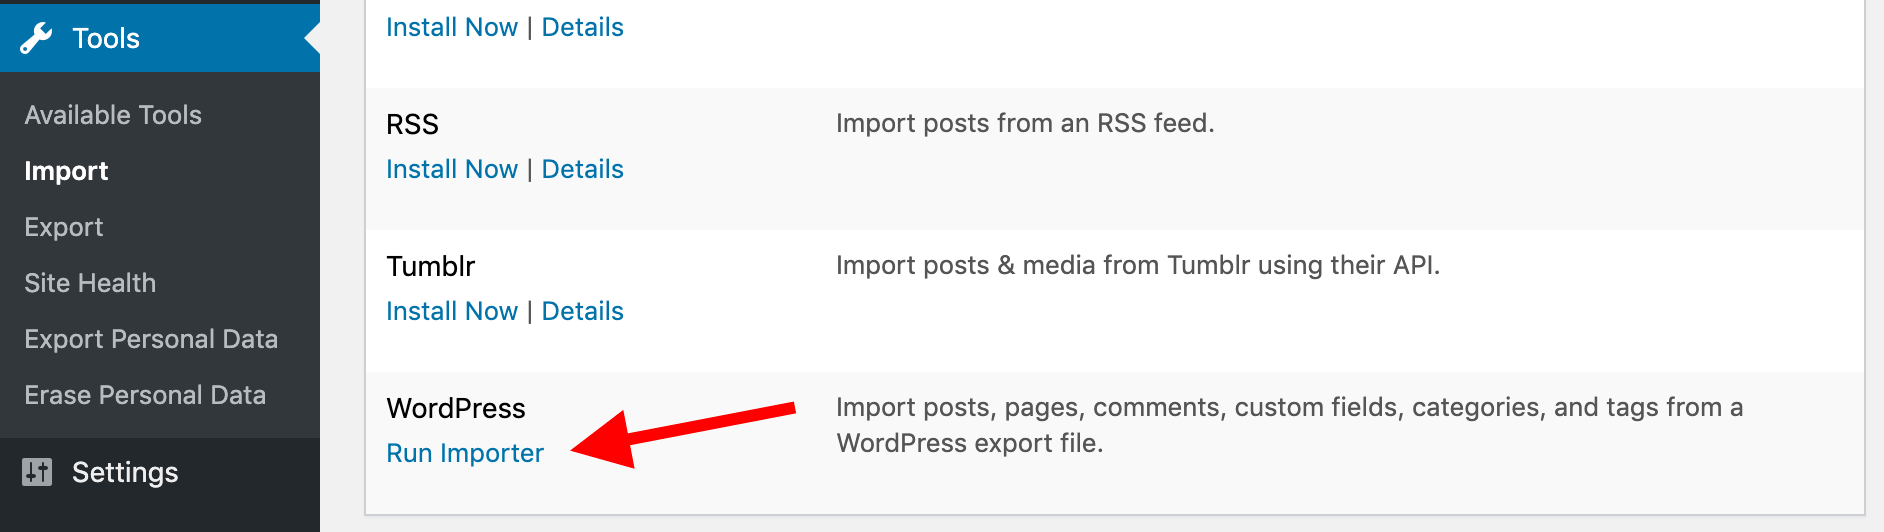 run importer in WordPress